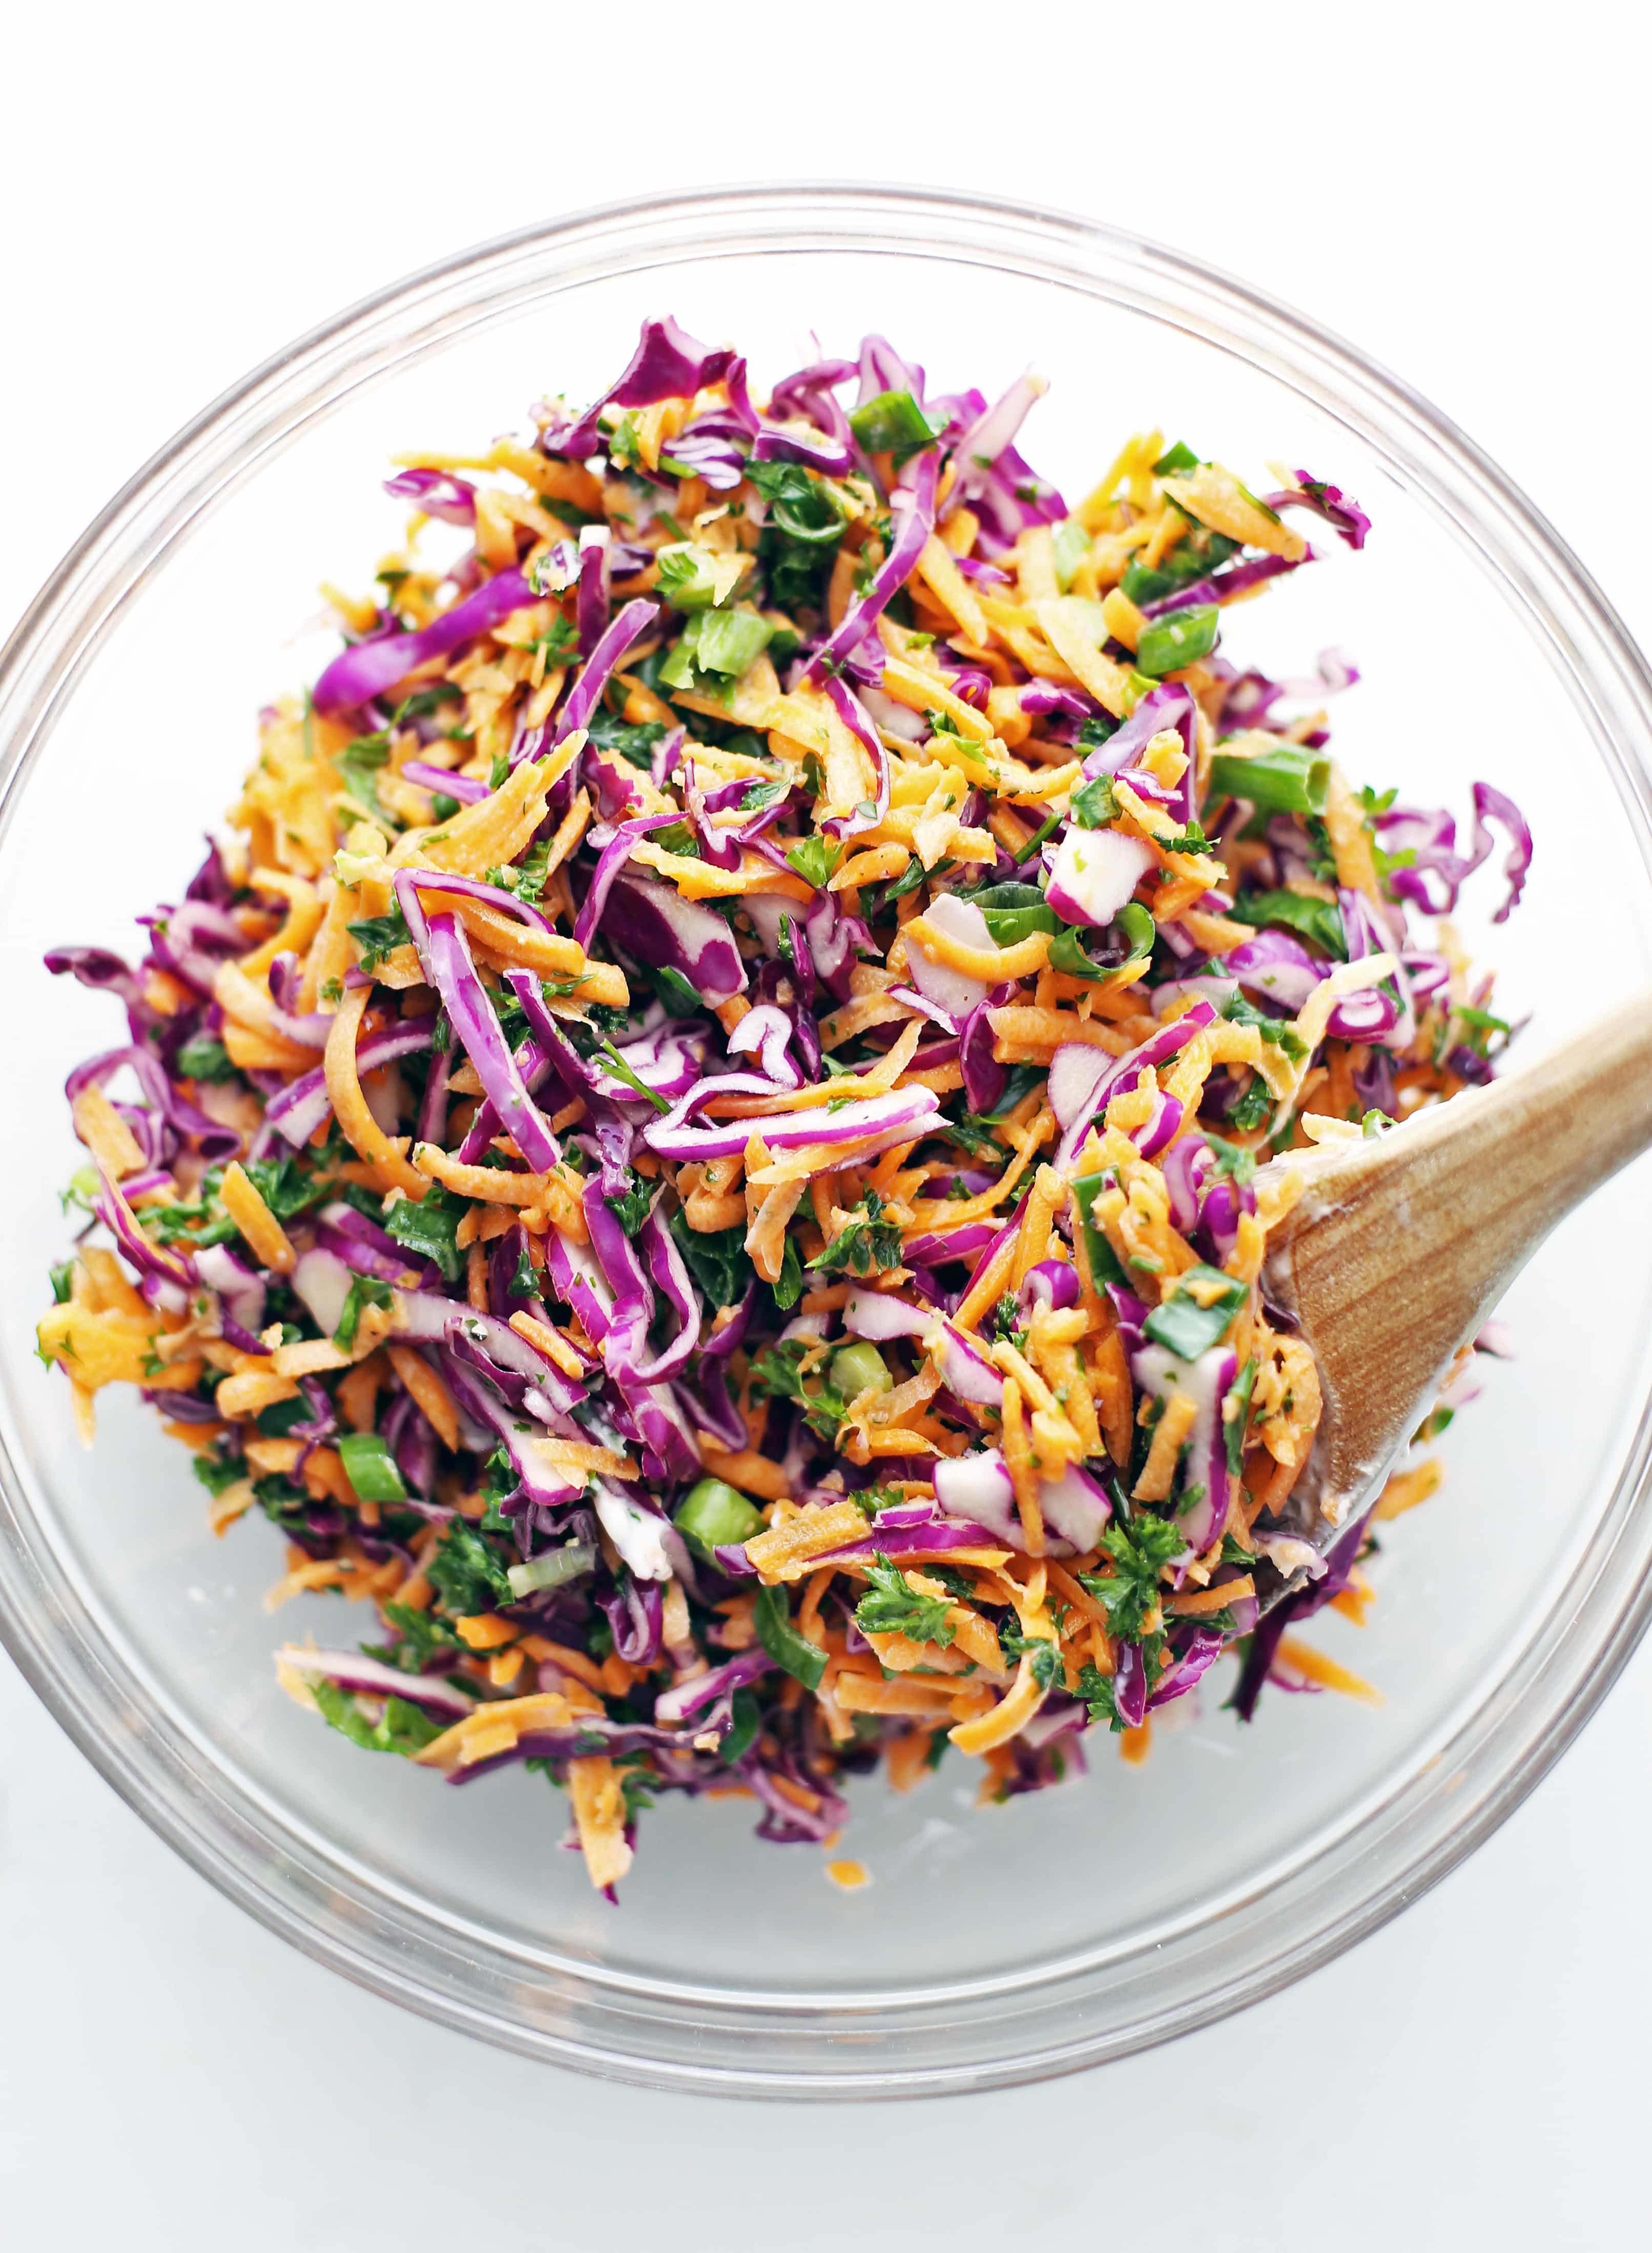 Red Cabbage Salad Recipes Healthy | Healthy Recipes